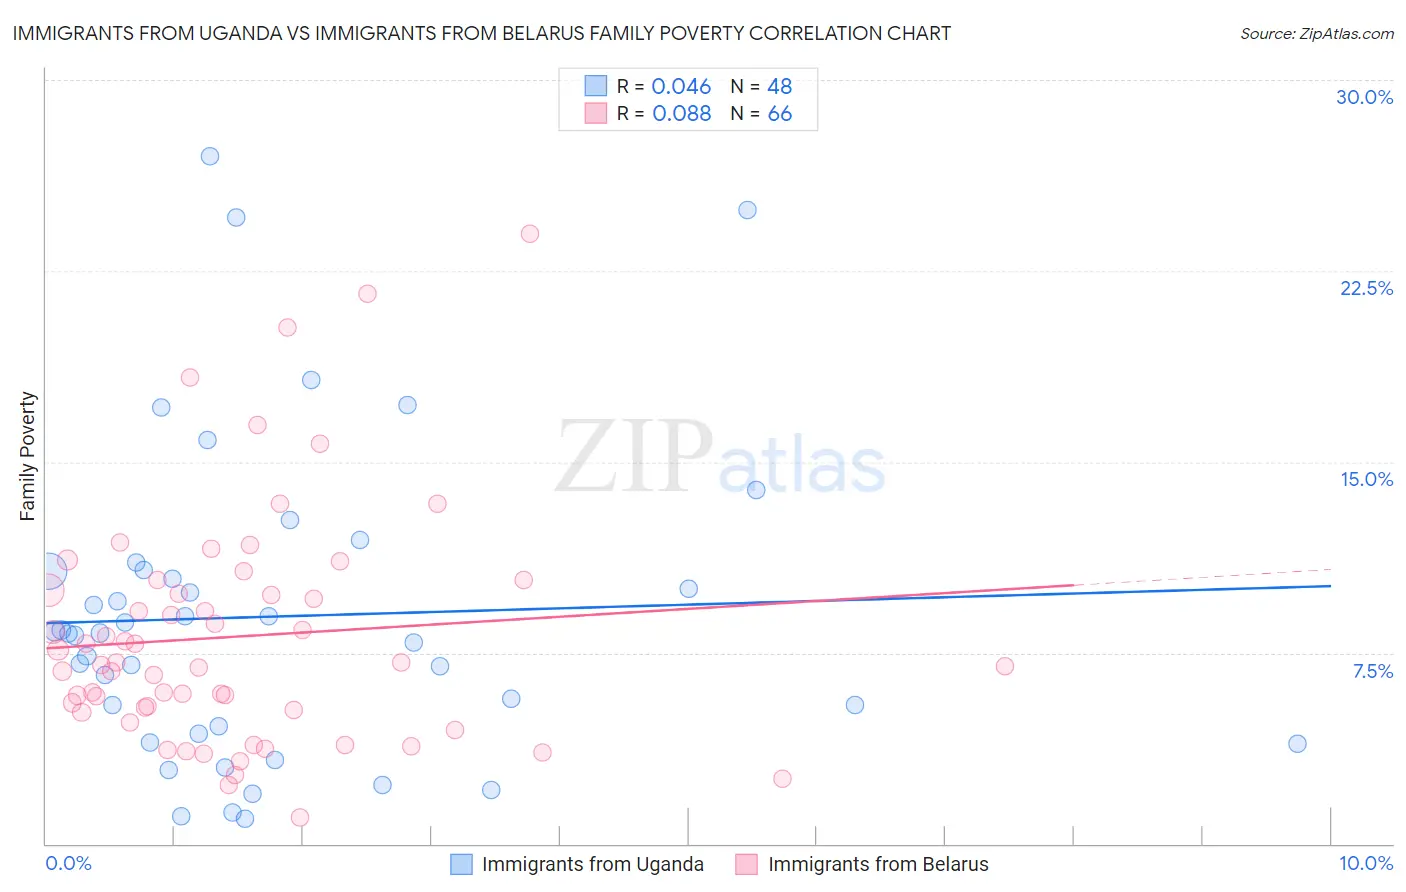 Immigrants from Uganda vs Immigrants from Belarus Family Poverty